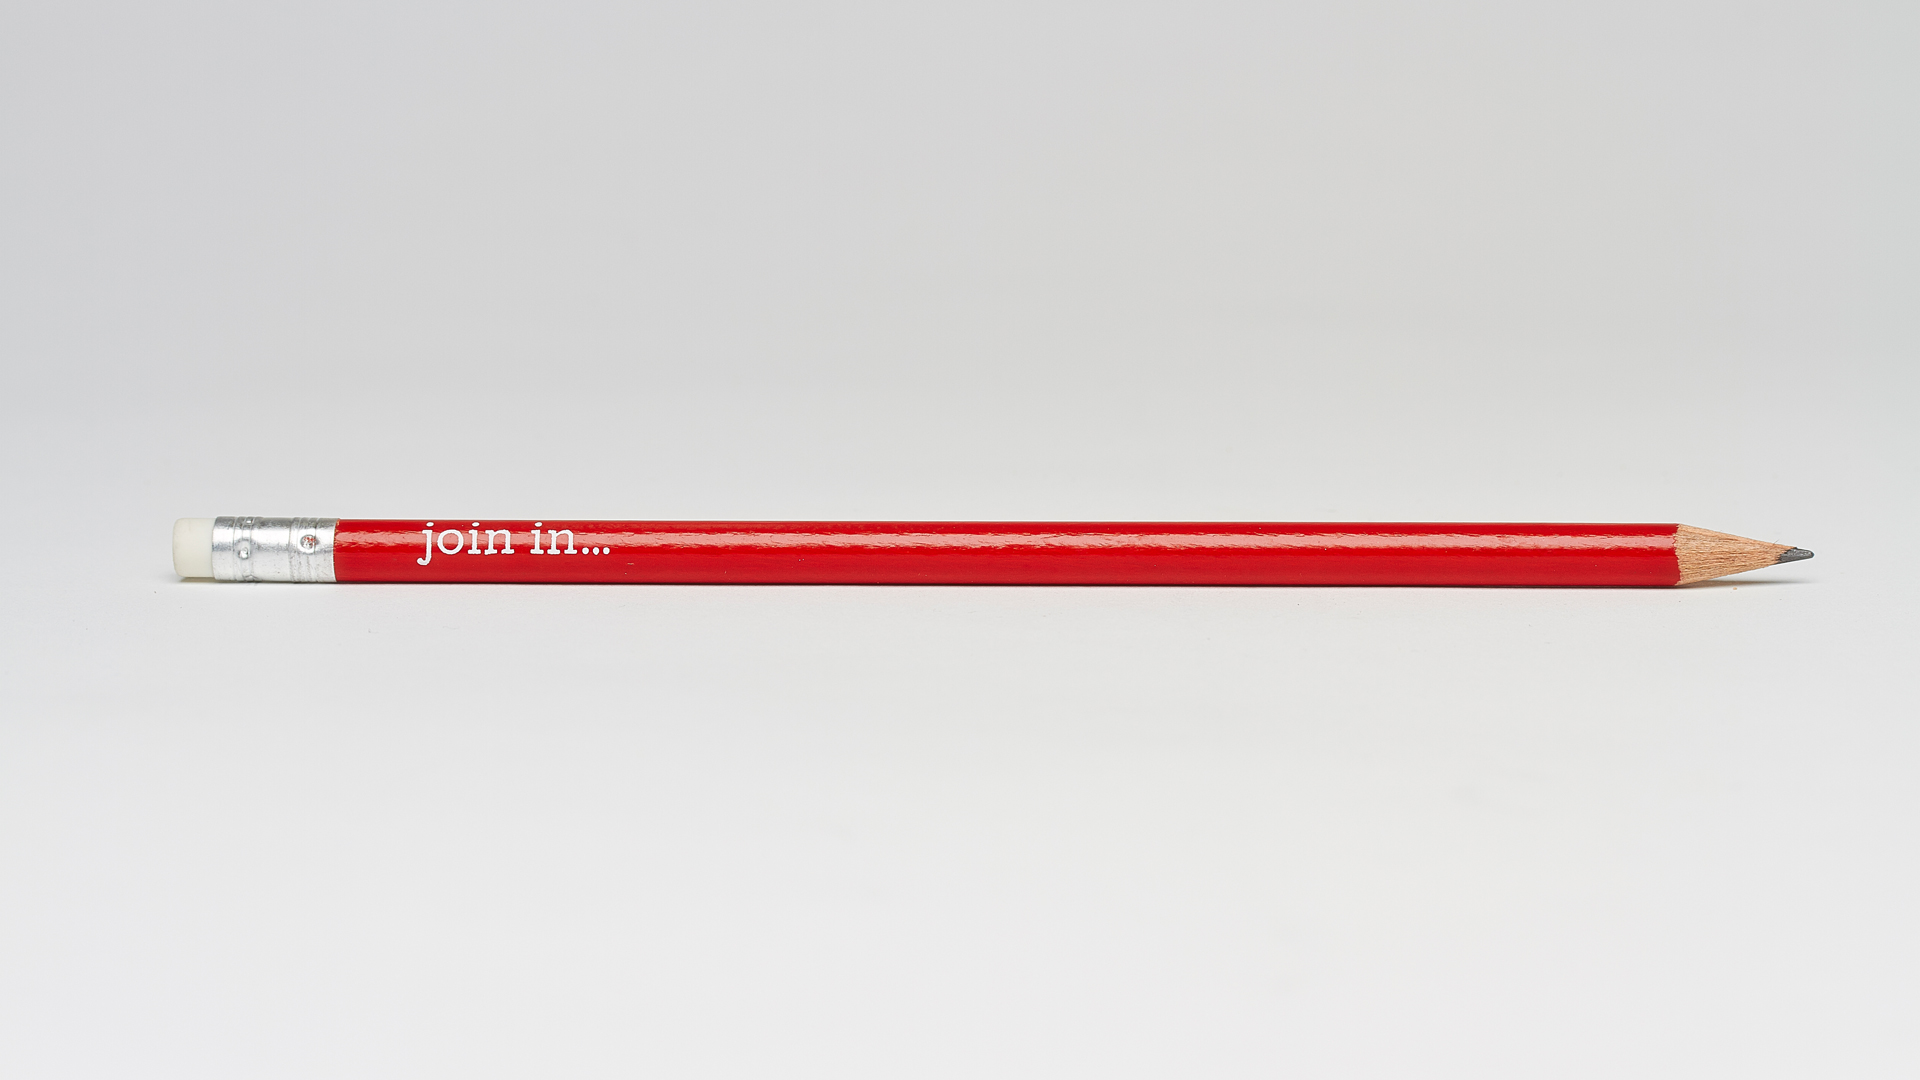 Godolphin And Latymer School branded fundraiser pencil